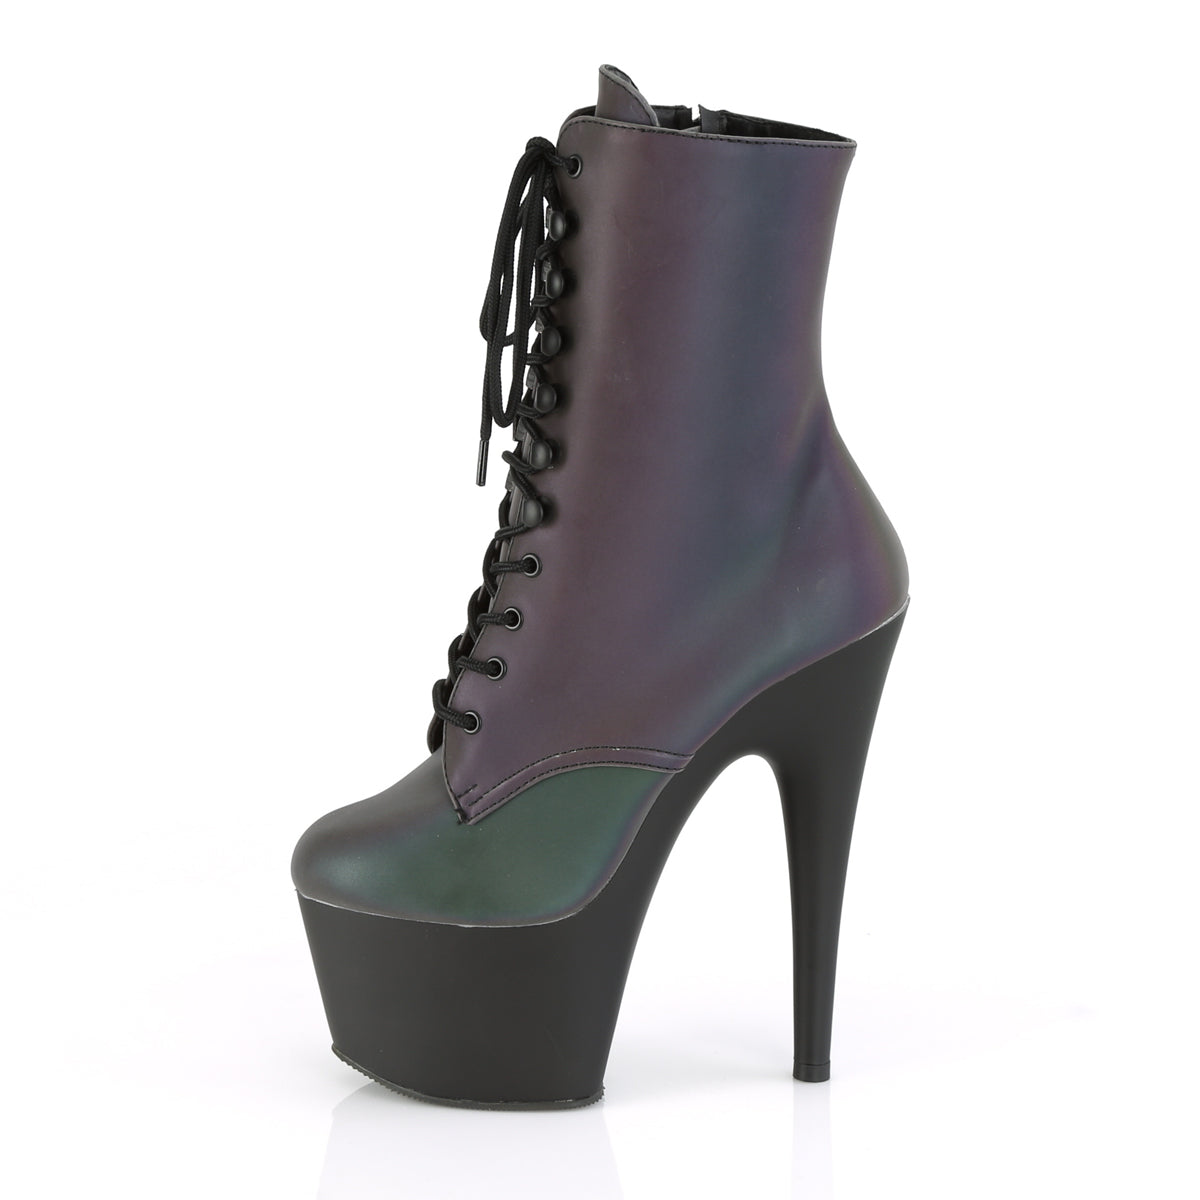 Pleaser Womens Ankle Boots ADORE-1020REFL Green Multi Reflective/Blk Matte